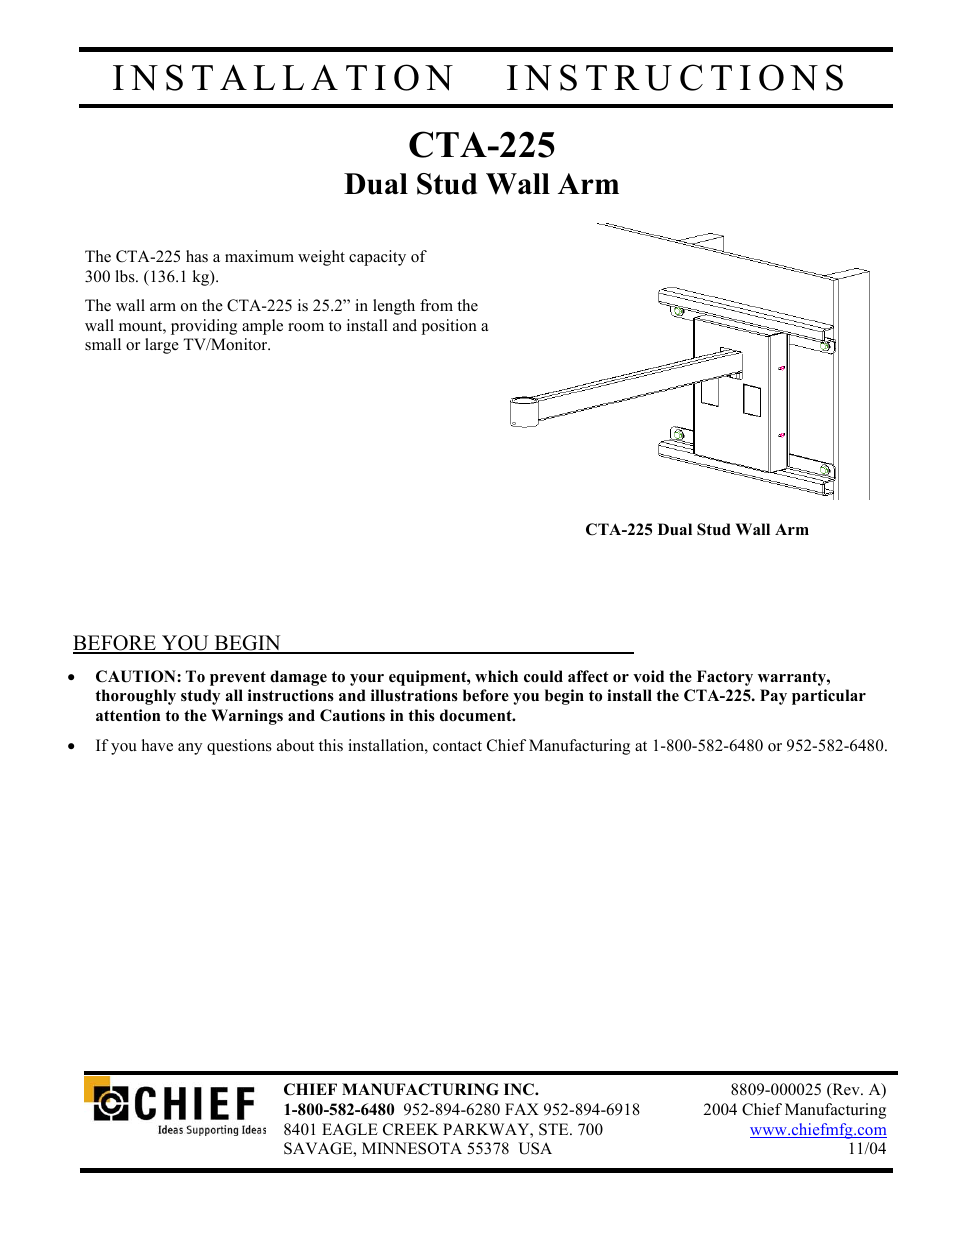 Dual Stud Wall Arm CTA-225